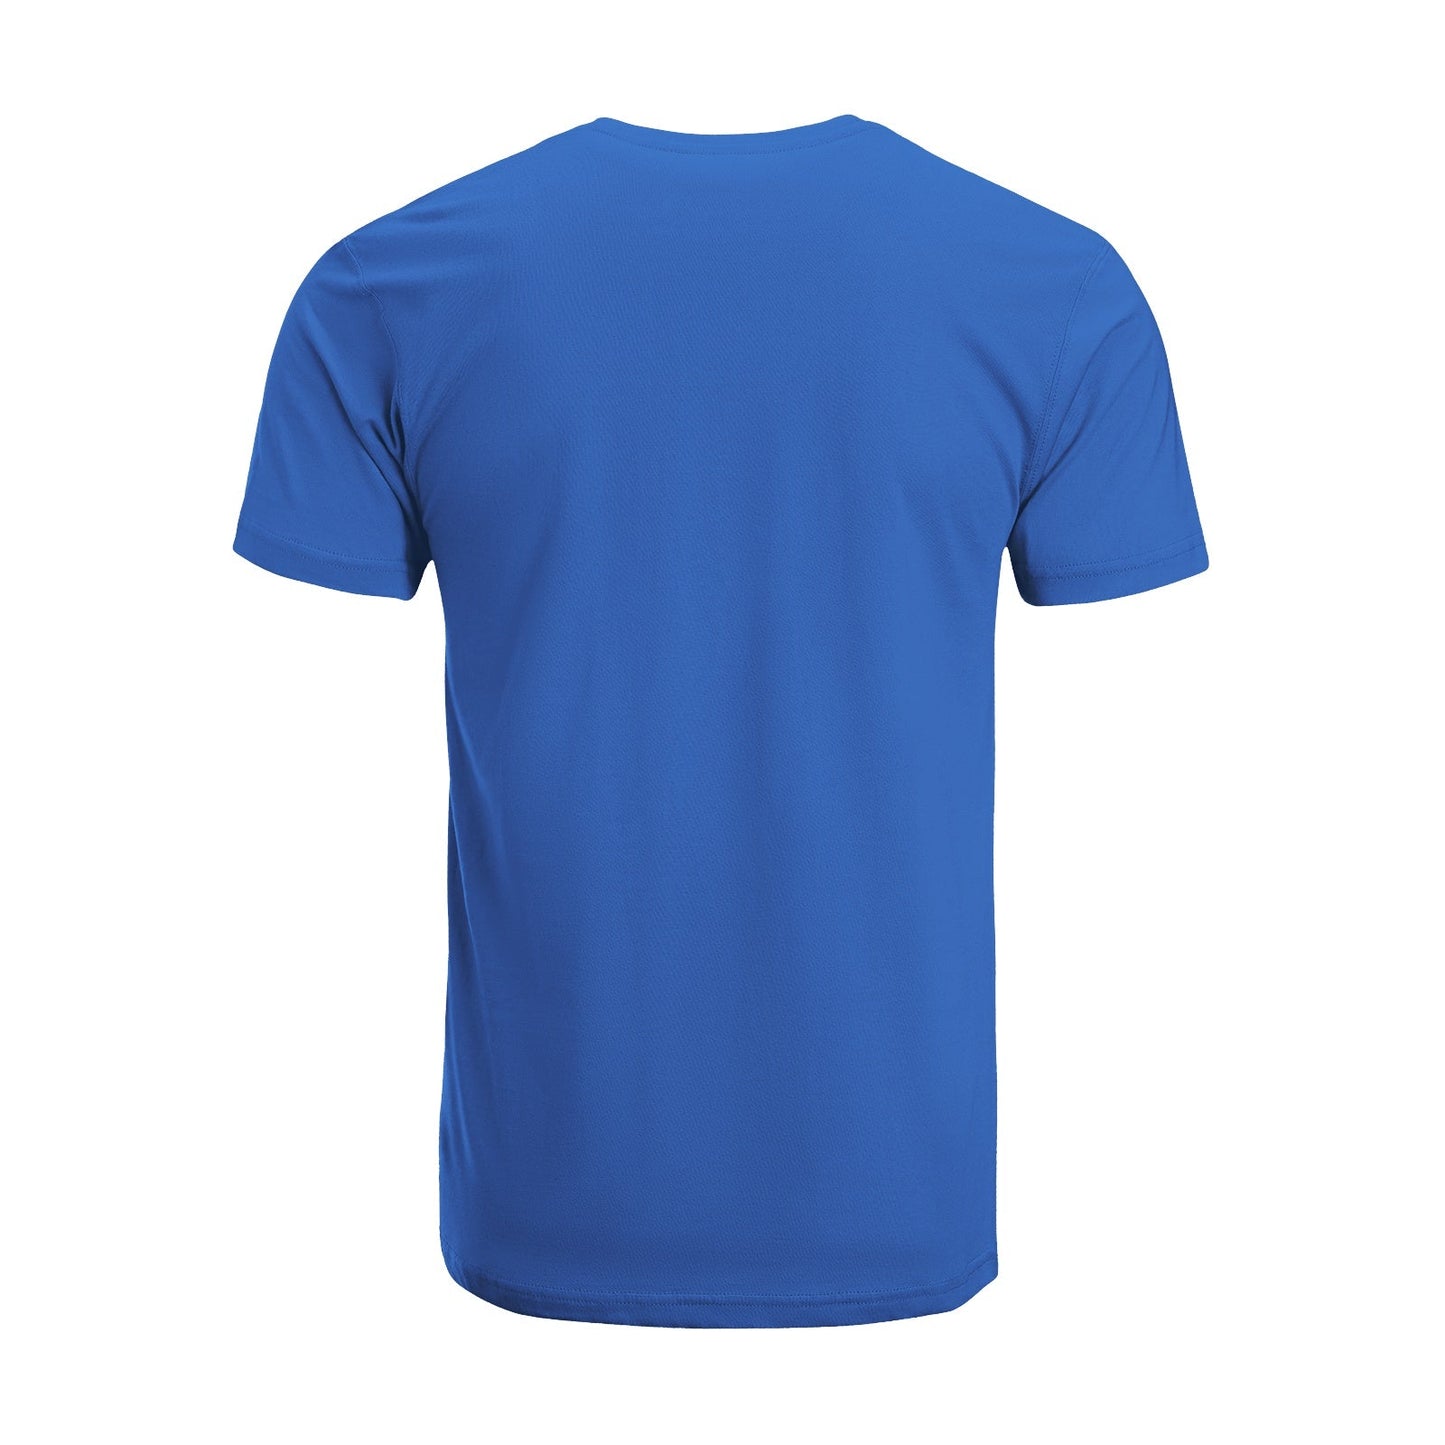 Unisex Short Sleeve Crew Neck Cotton Jersey T-Shirt CAT 35 - Tara-Outfits.com